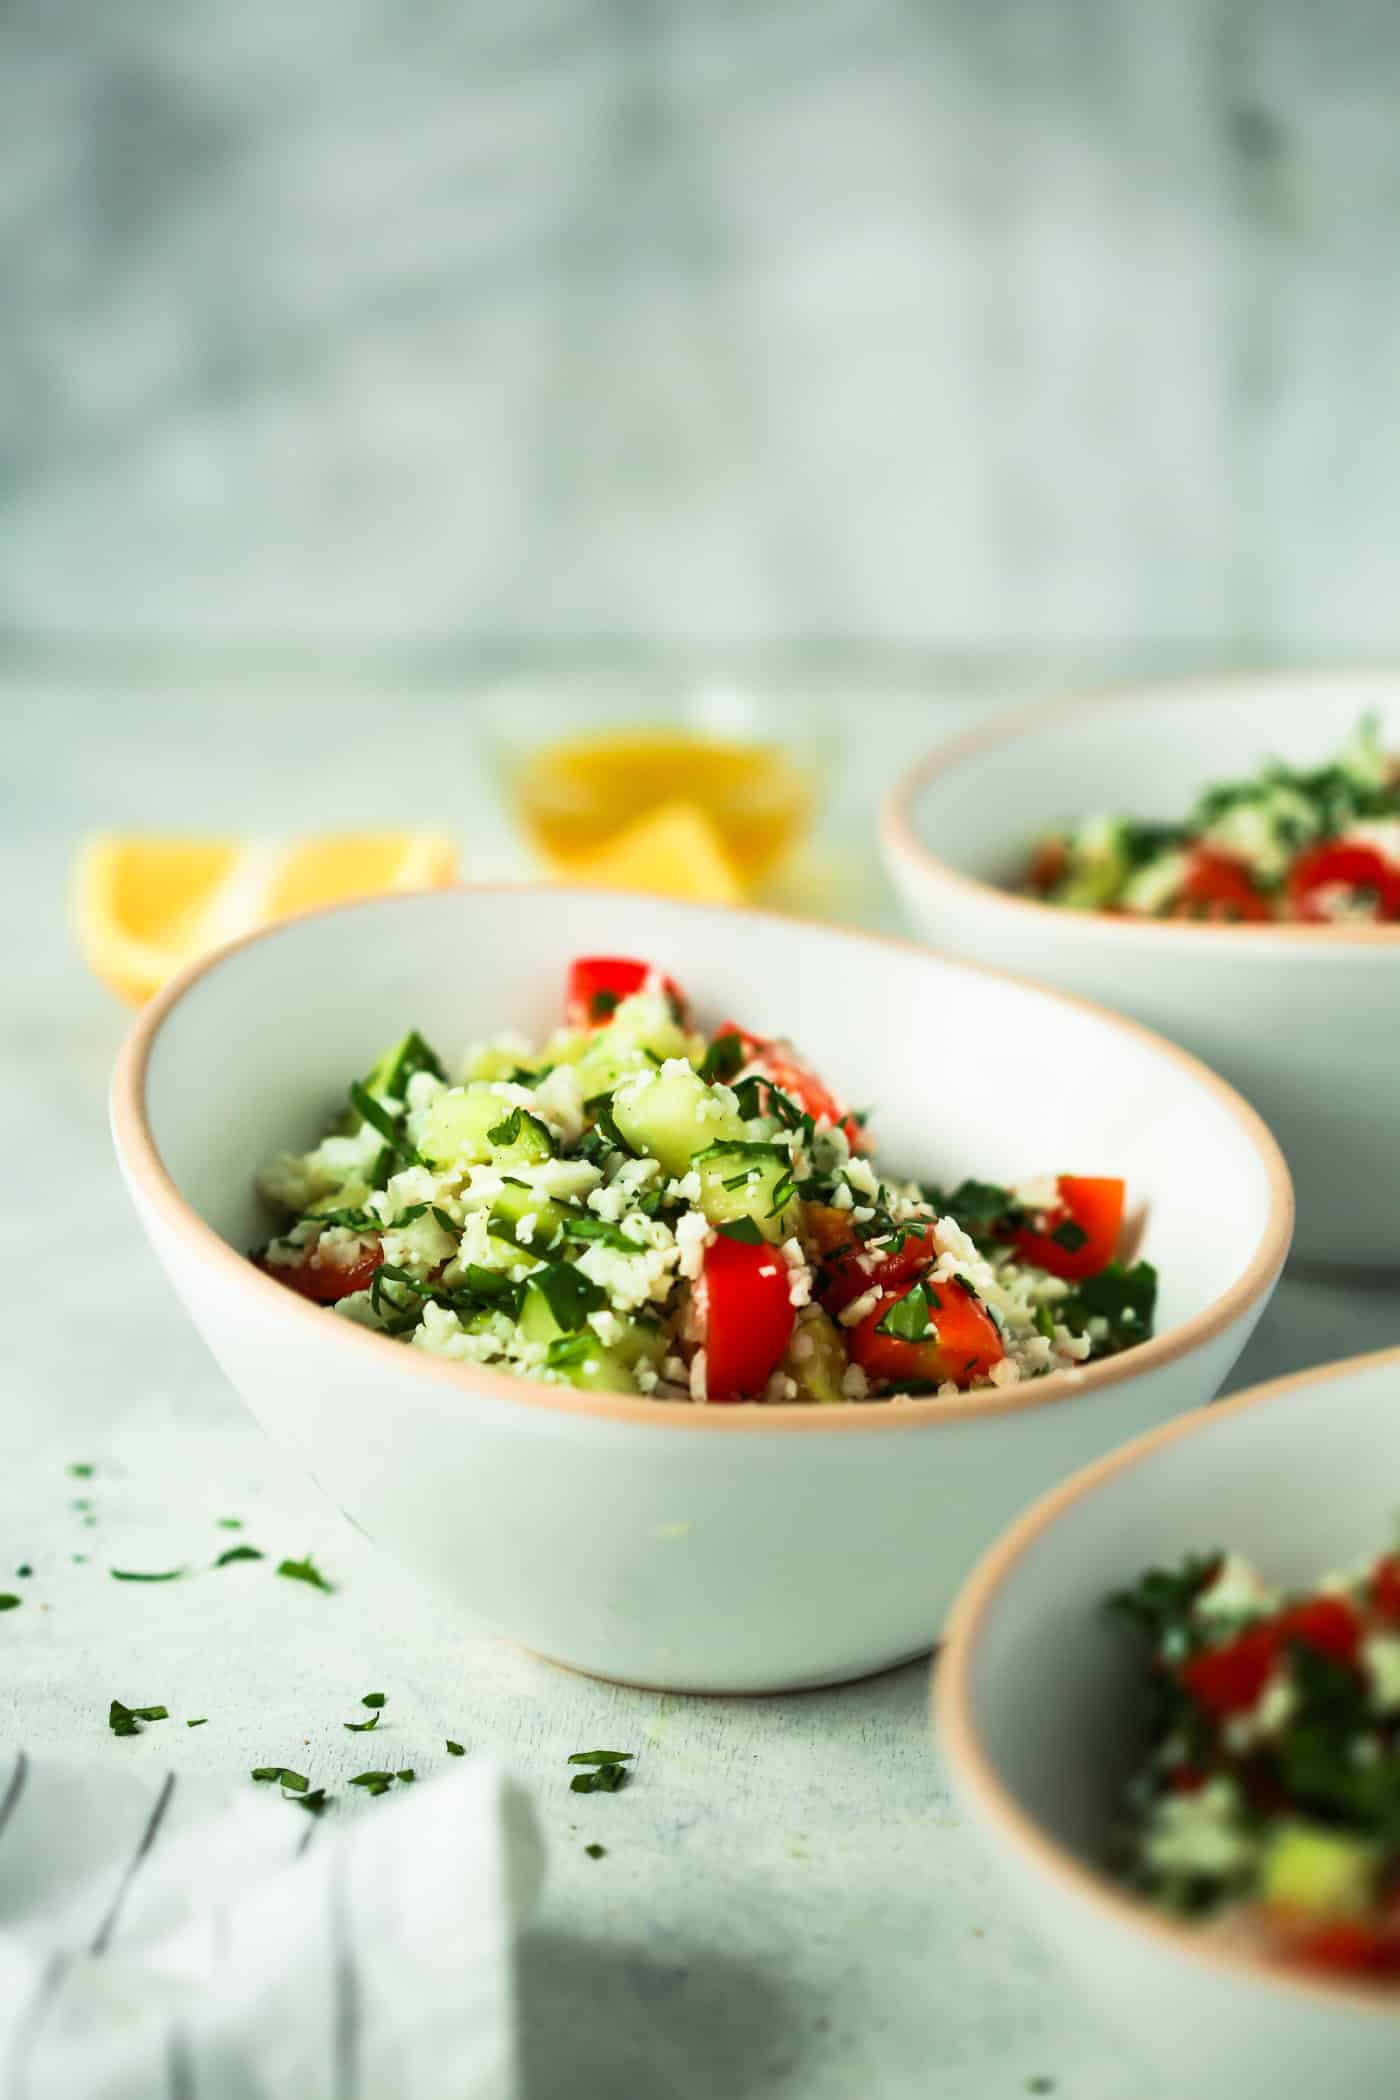 Cauliflower “Rice” Tabbouleh Salad